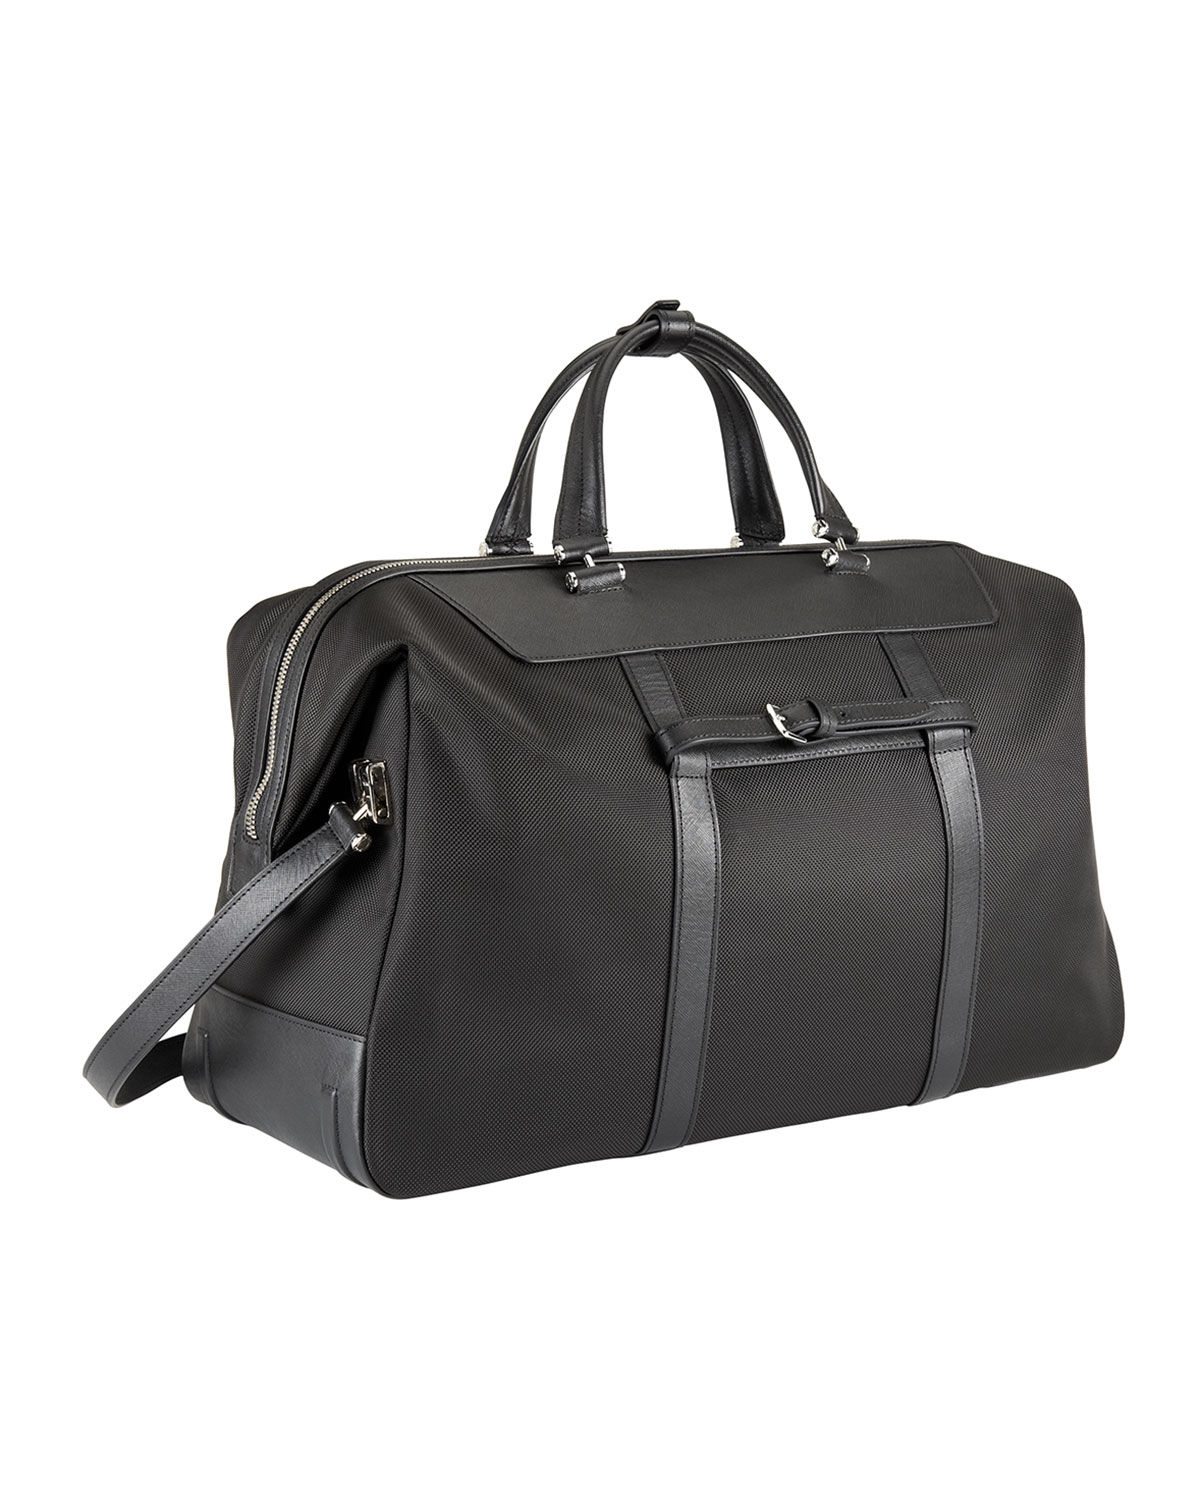 Lyst - Tumi Waldorf Soft Duffel Bag in Black for Men